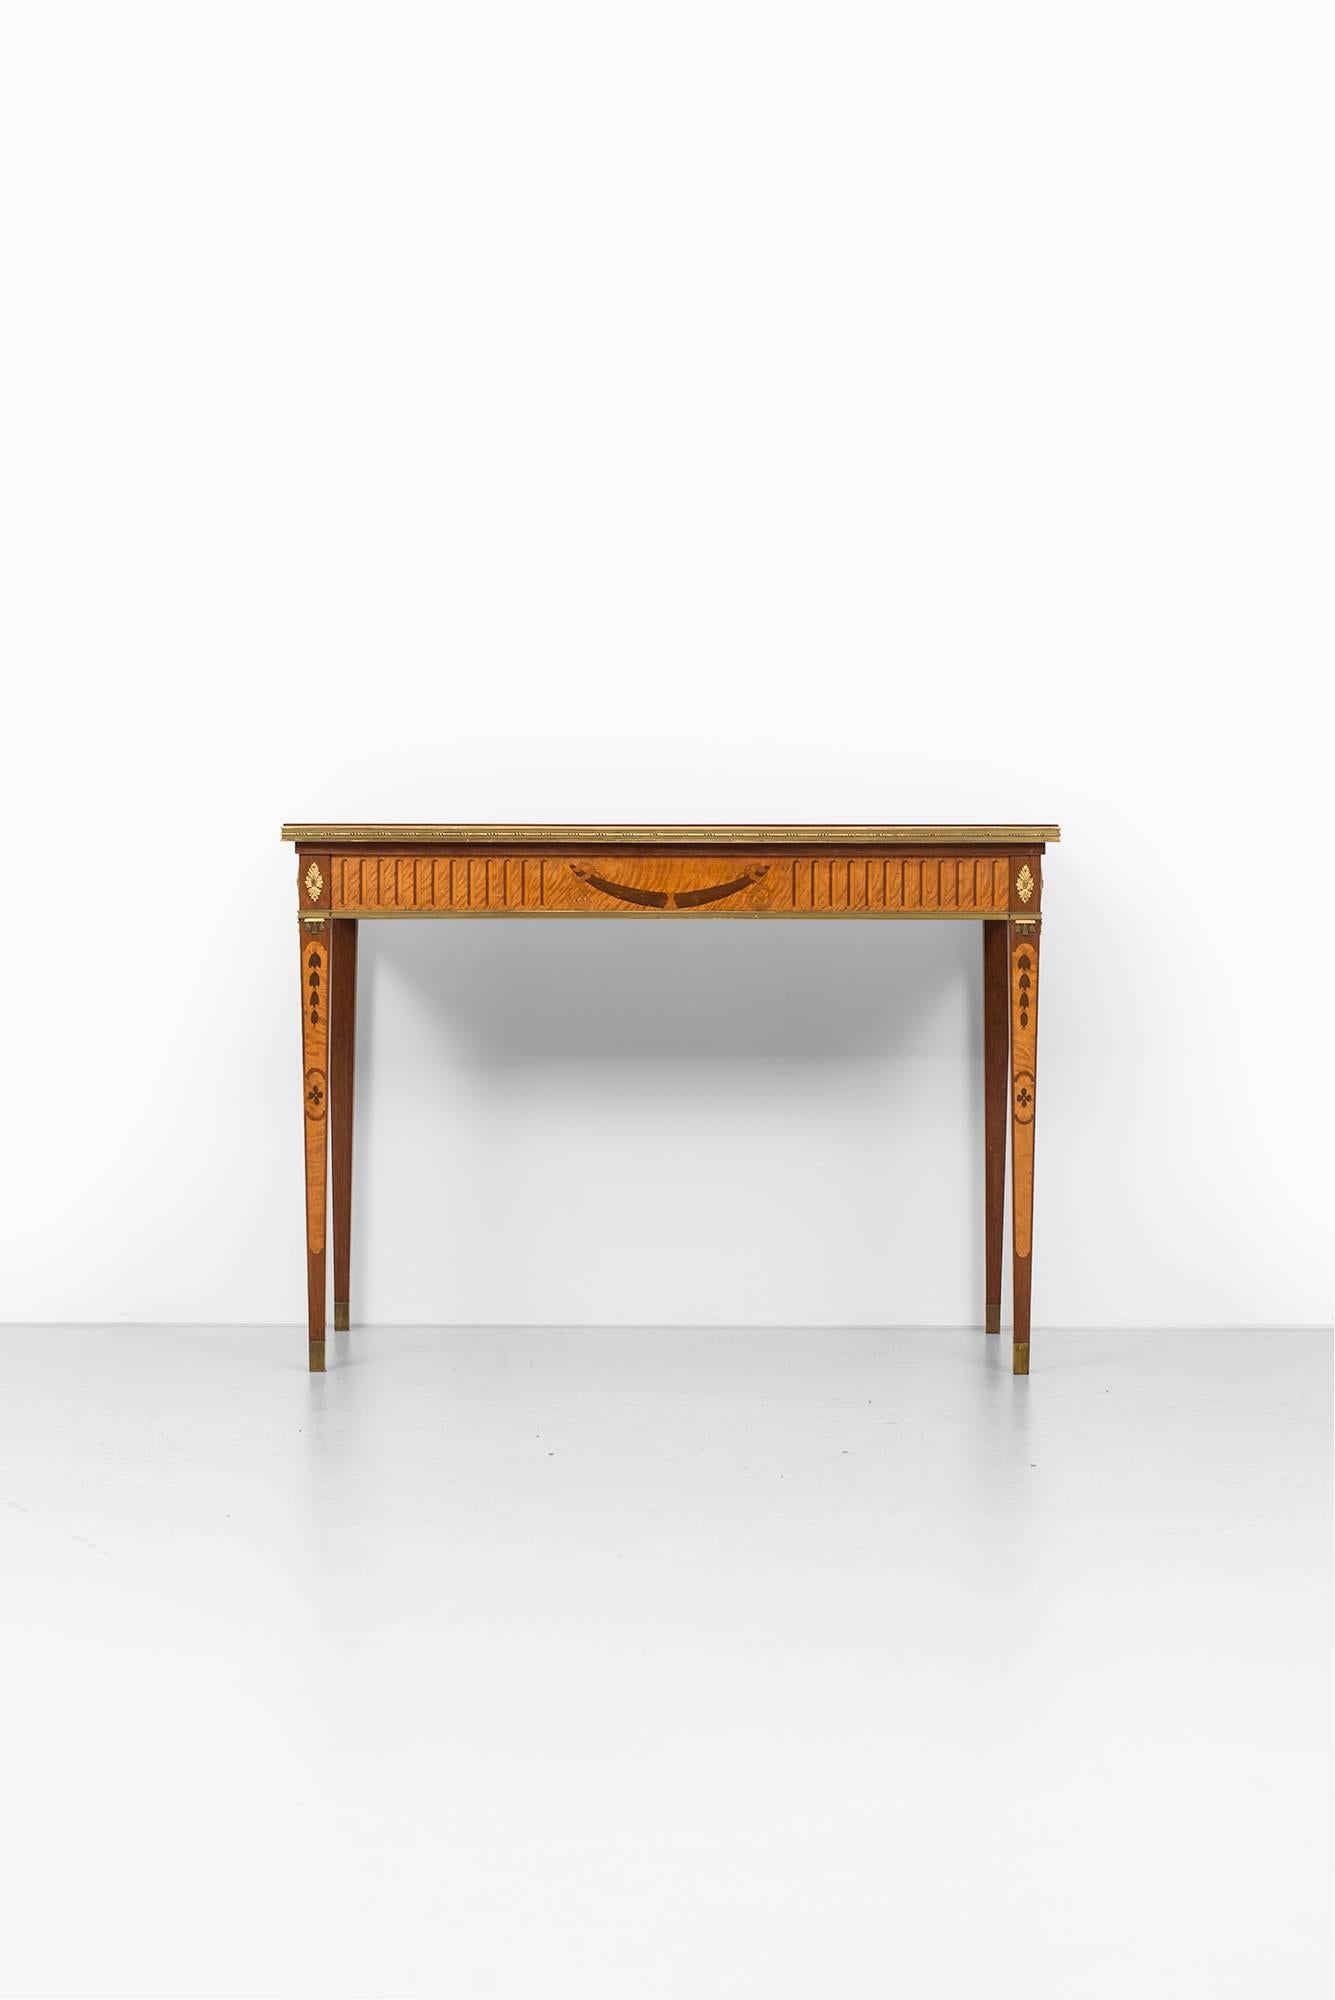 Mid-20th Century Gustavian Console Table in Mahogany by Nordiska Kompaniet in Sweden